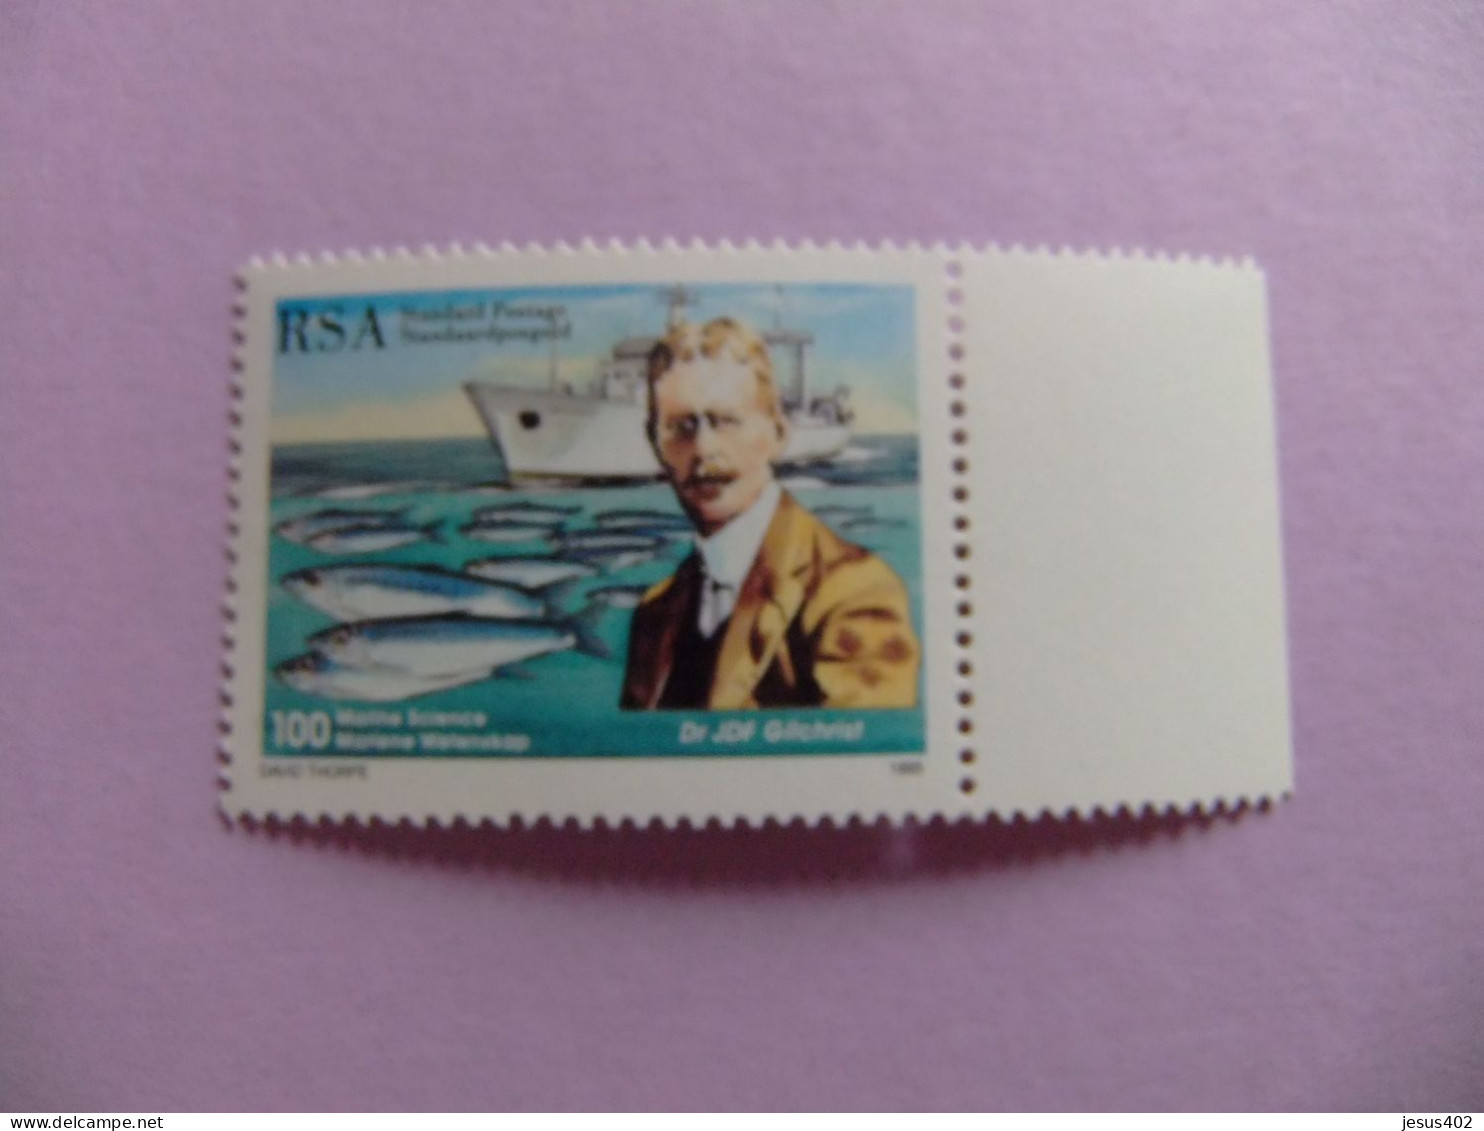 48 AFRICA DEL SUR / RSA 1995 / BIOLOGO JDF GILCHRIST  (CIENCIAS MARINAS) YVERT 883 MNH - Unused Stamps